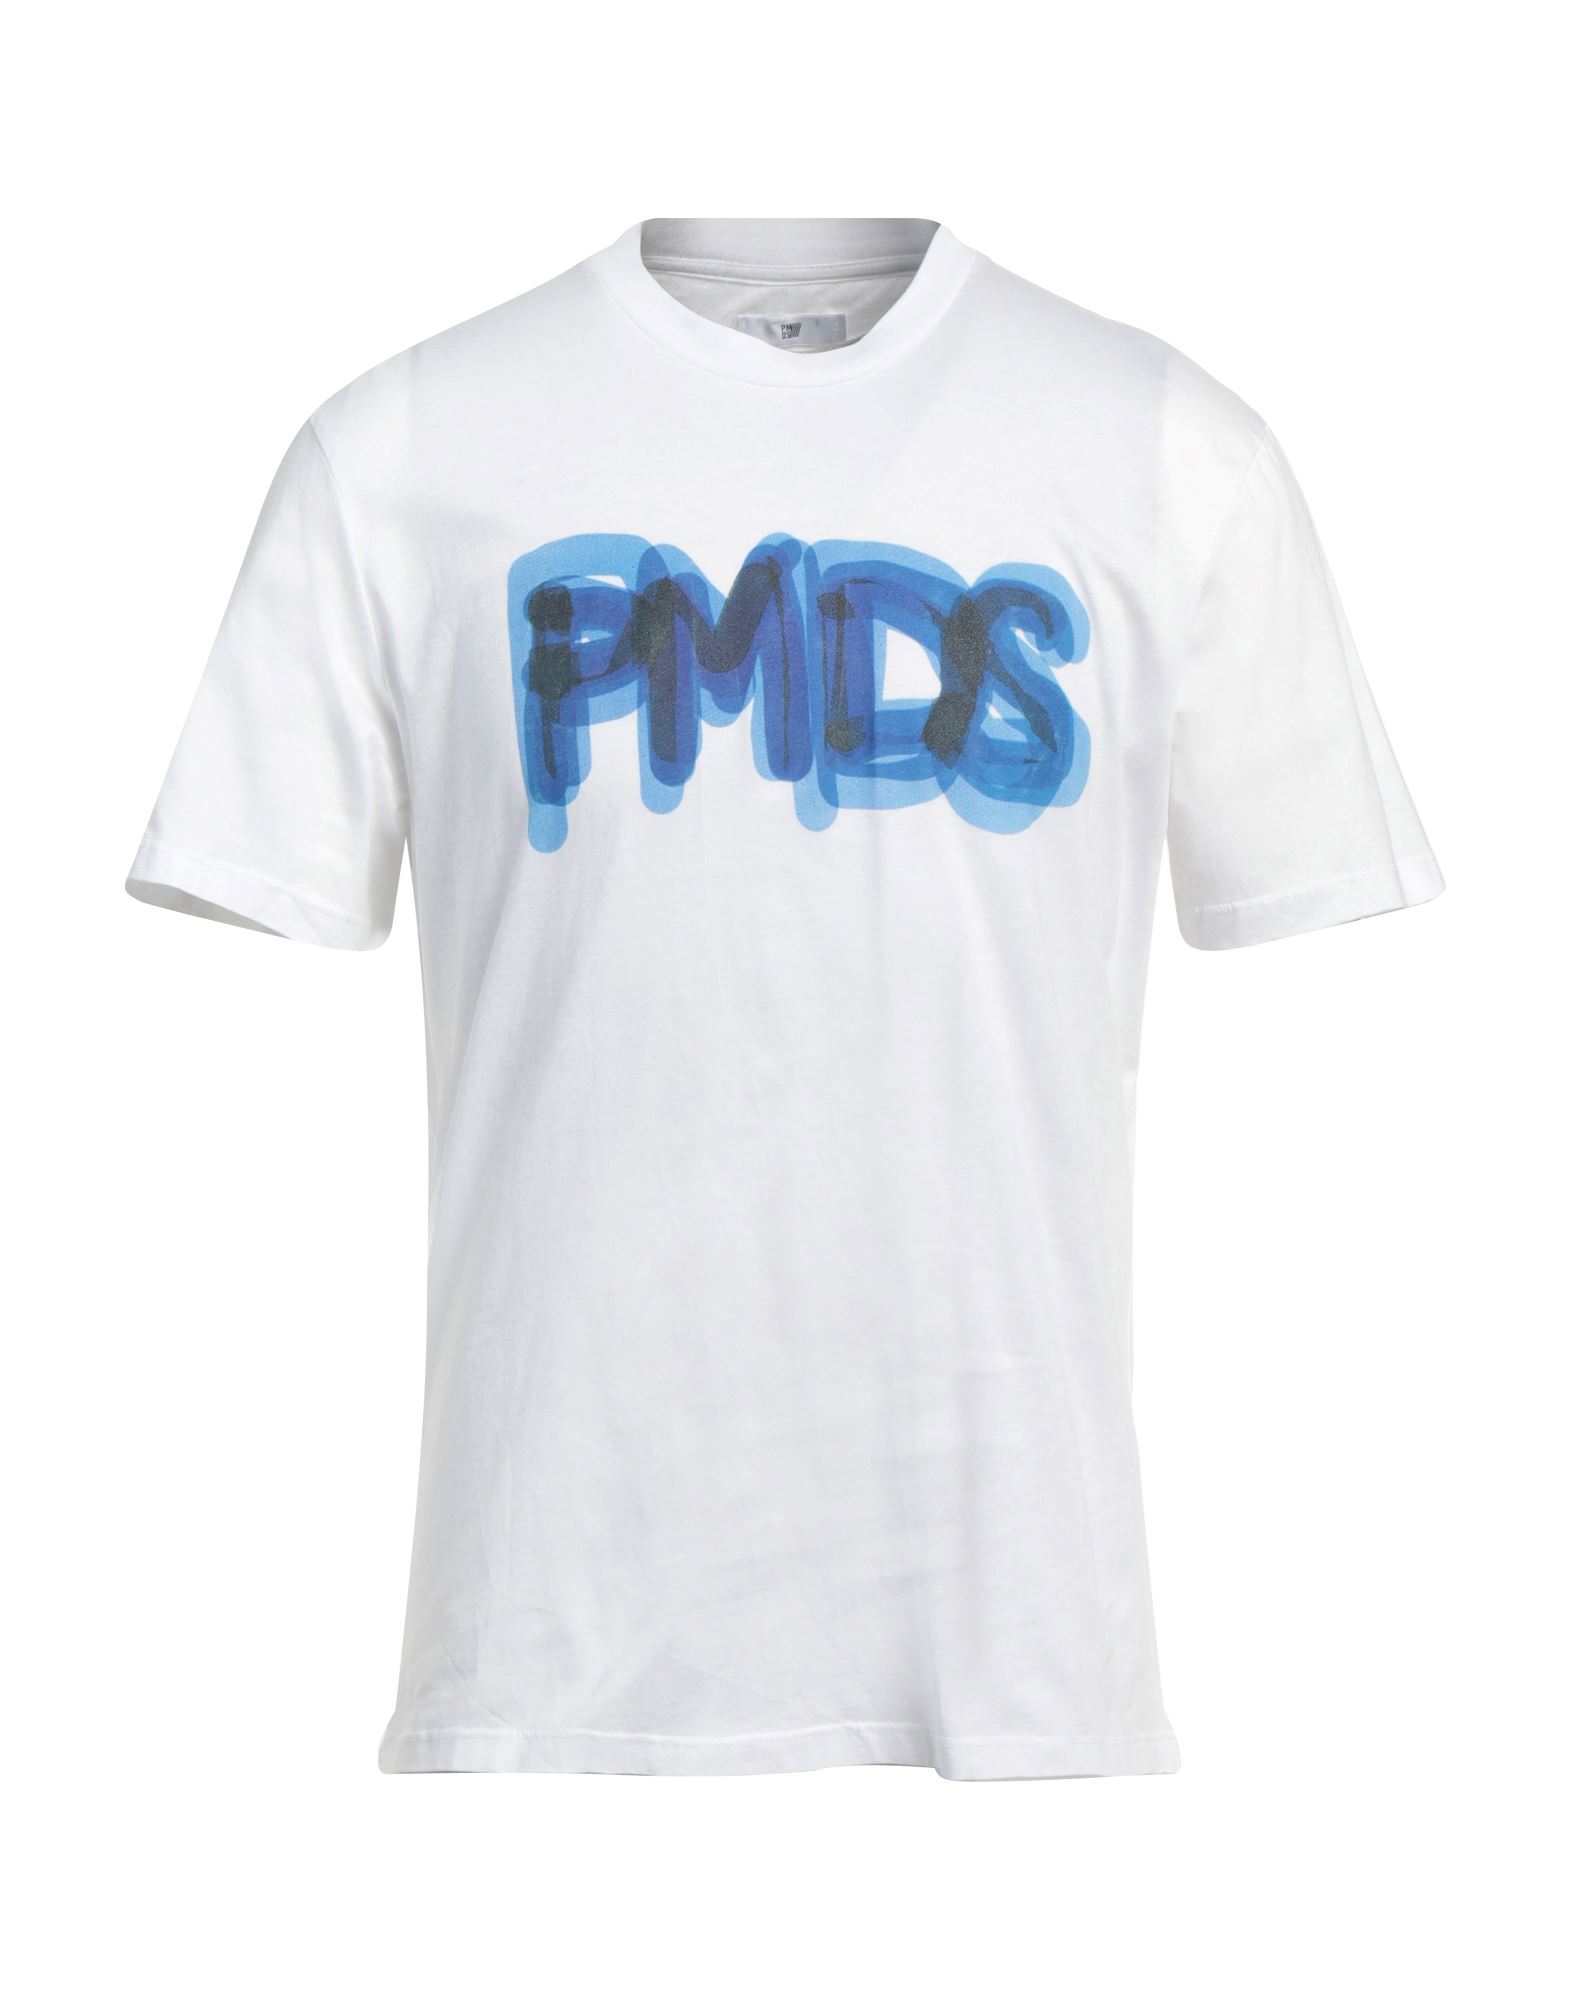 PMDS PREMIUM MOOD DENIM SUPERIOR T-shirts Herren Weiß von PMDS PREMIUM MOOD DENIM SUPERIOR